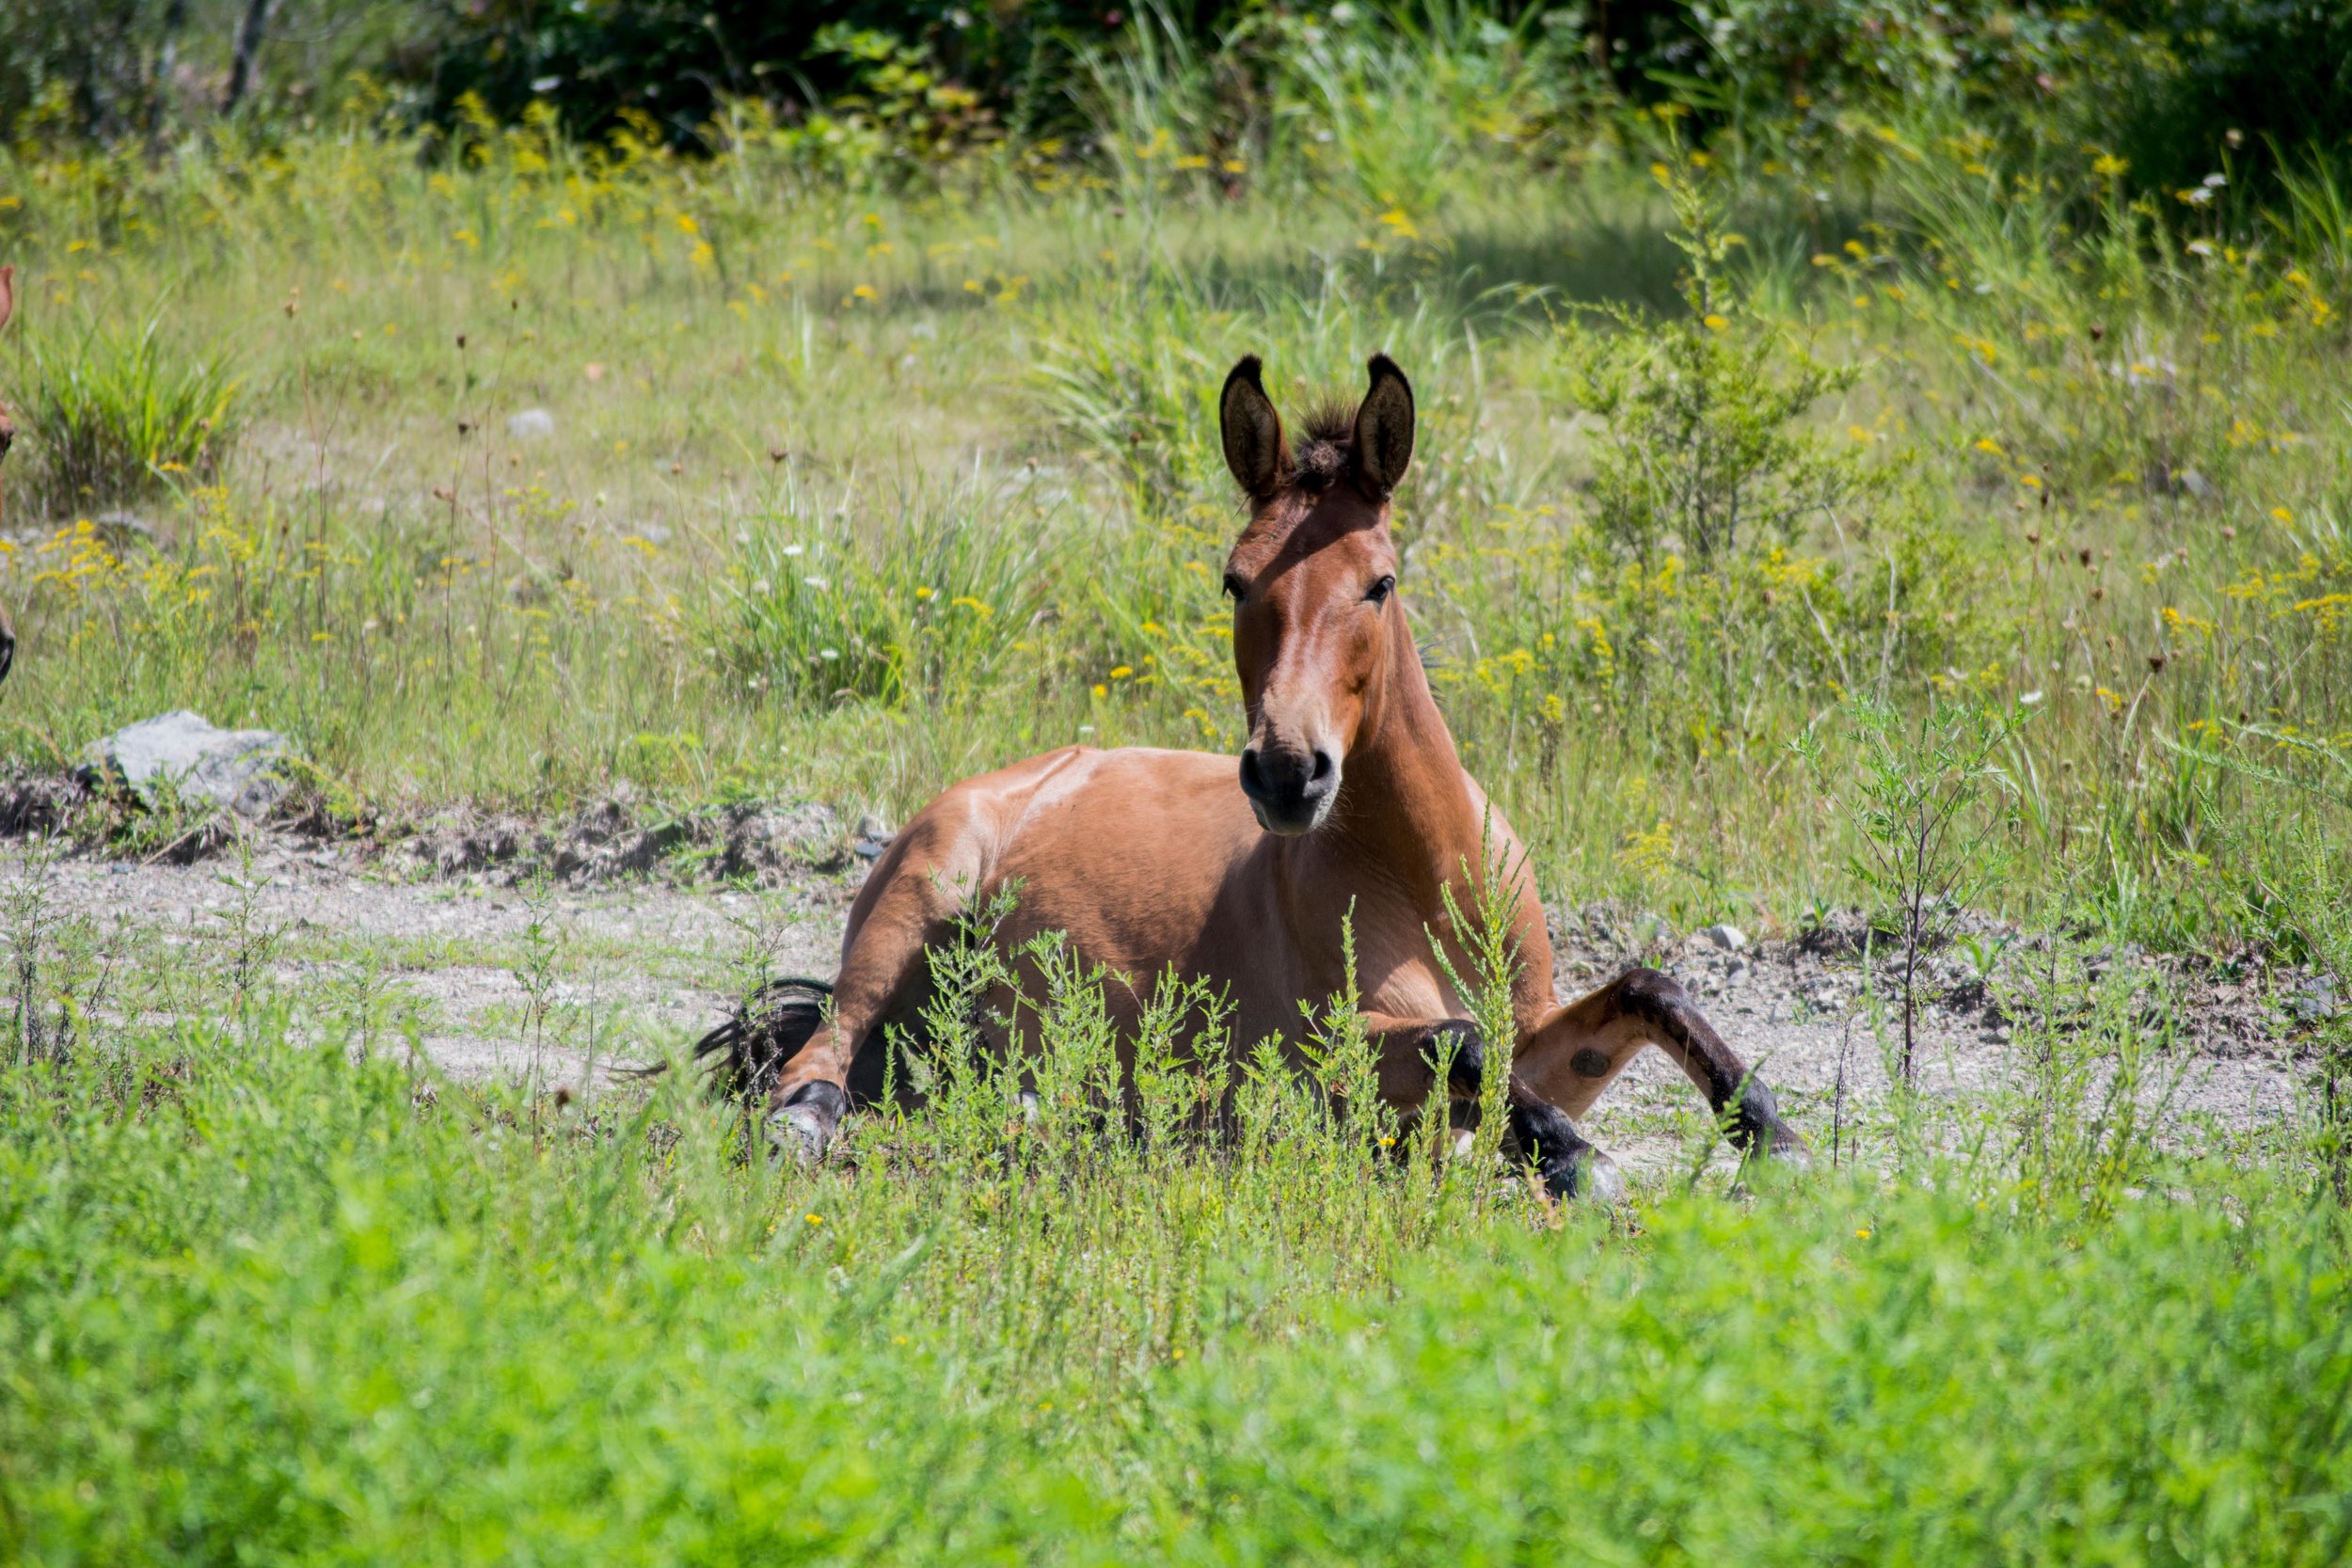  Kentucky's Free-Roaming Horses: The True Unbridled Spirit    